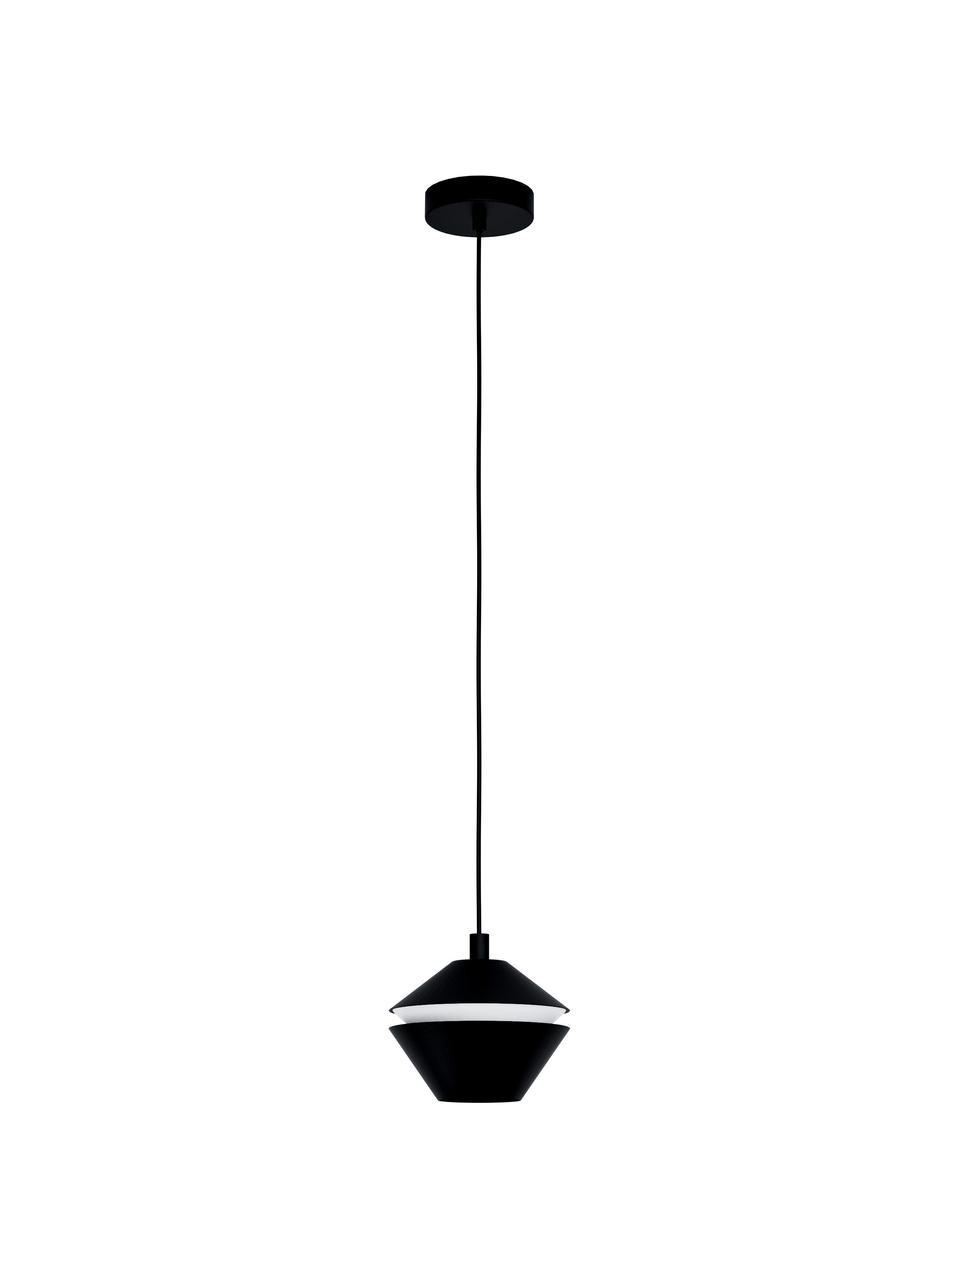 Kleine Pendelleuchte Perpigo, Lampenschirm: Metall, lackiert, Baldachin: Metall, lackiert, Schwarz, Ø 17 x H 110 cm